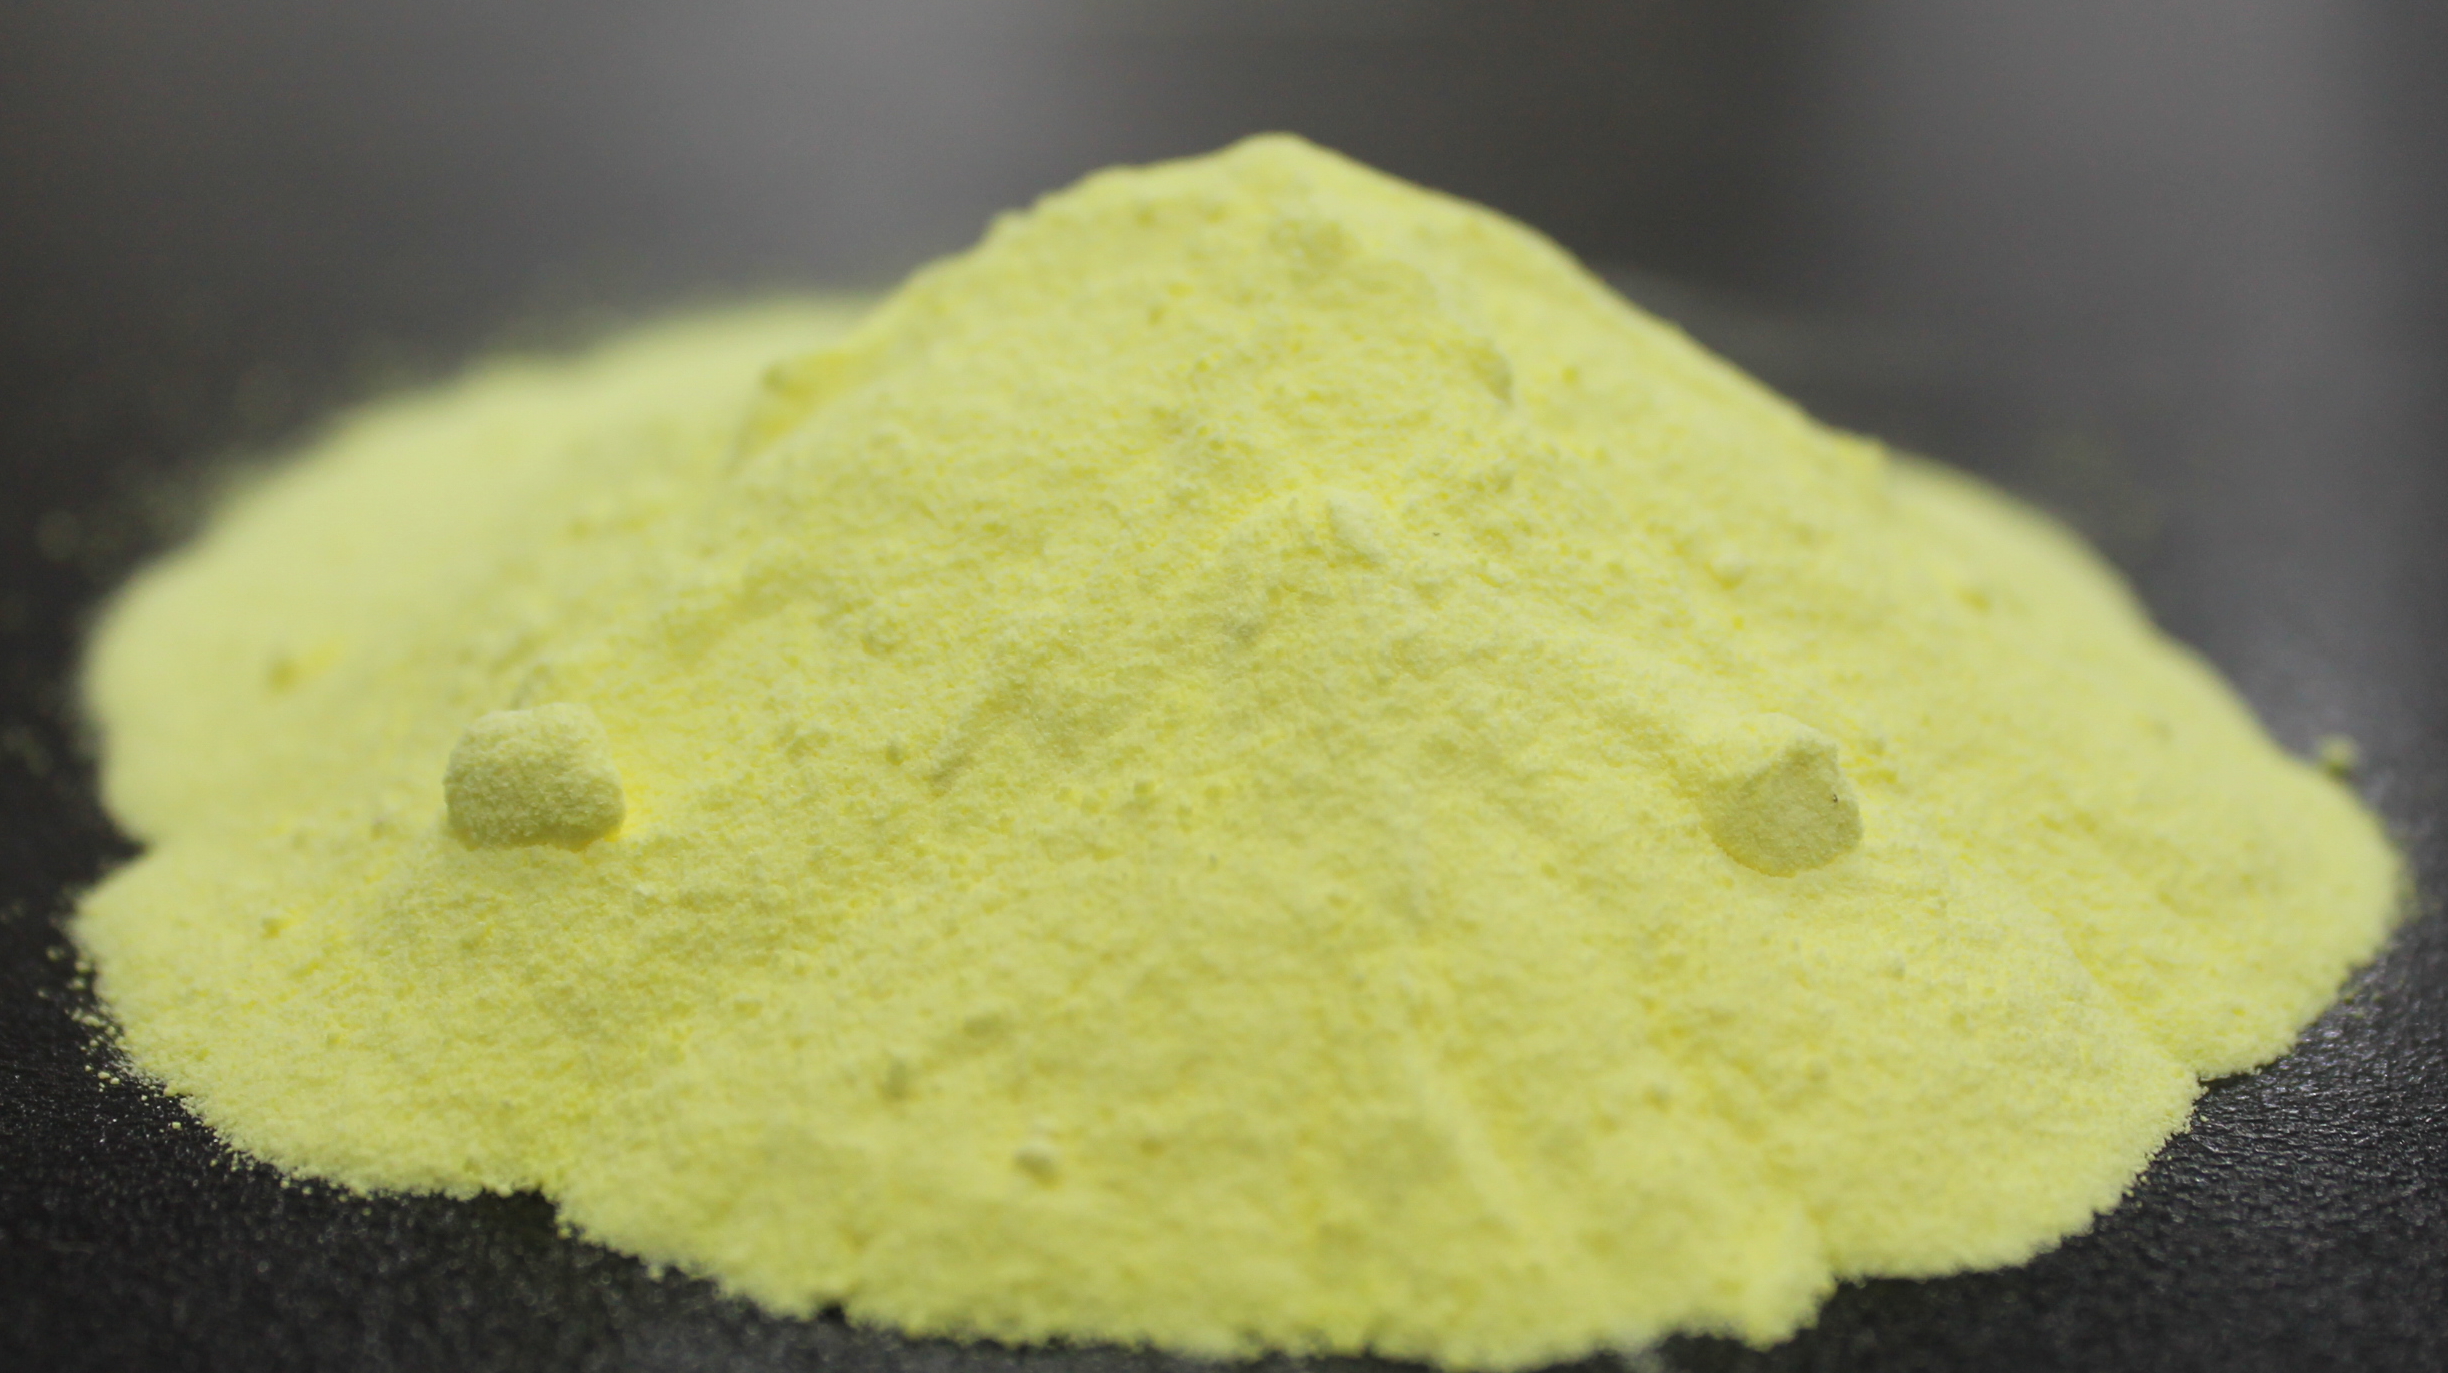 powder sulphur, powder sulfur, yellow powder sulphur 325 mesh